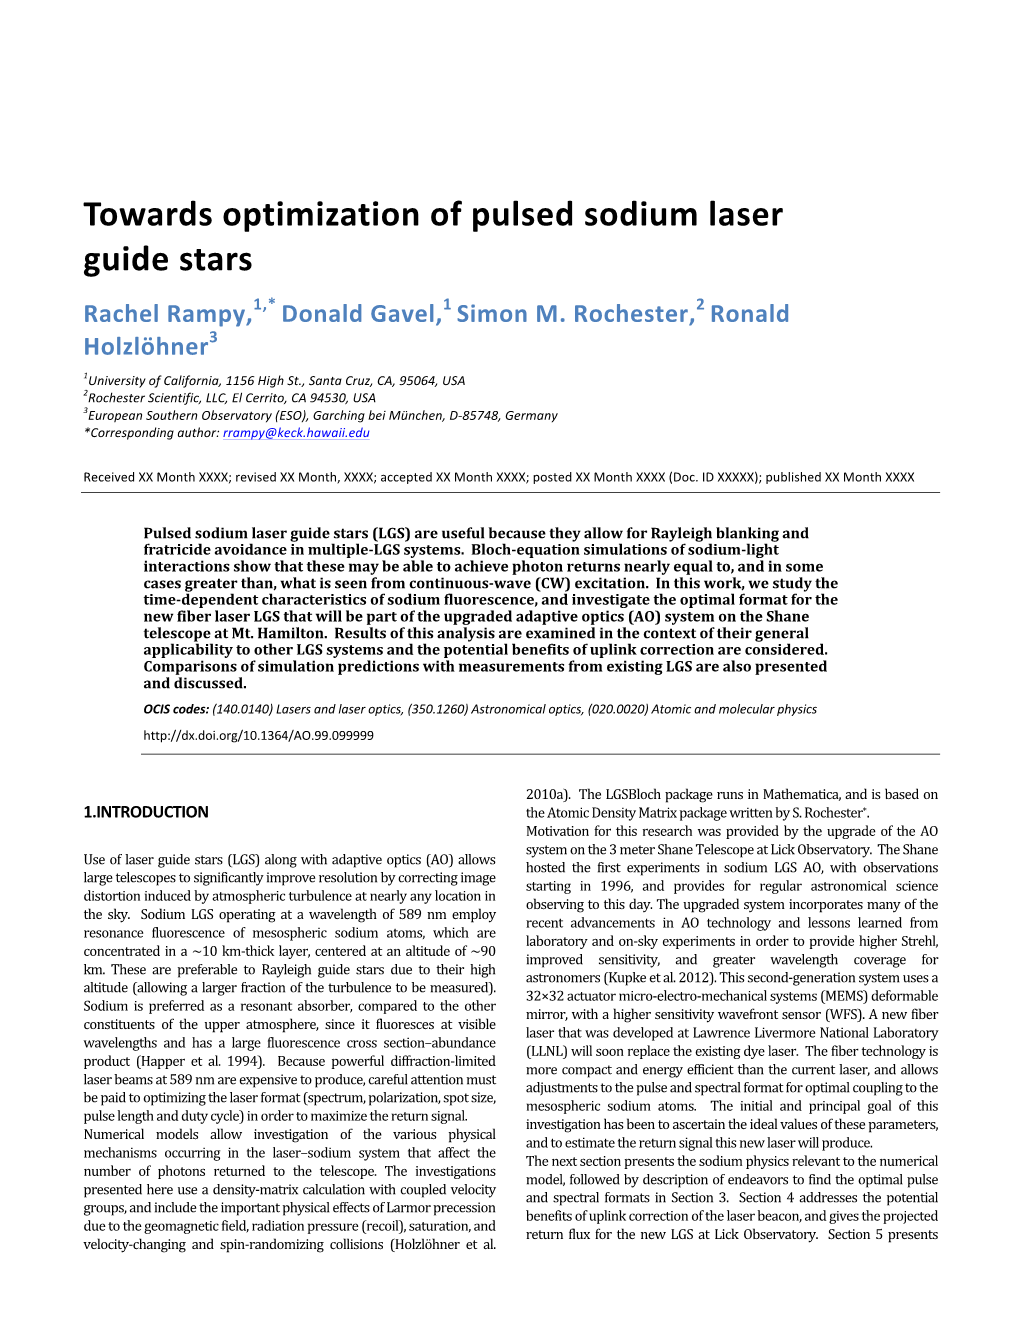 Towards Optimization of Pulsed Sodium Laser Guide Stars Rachel Rampy,1,* Donald Gavel,1 Simon M